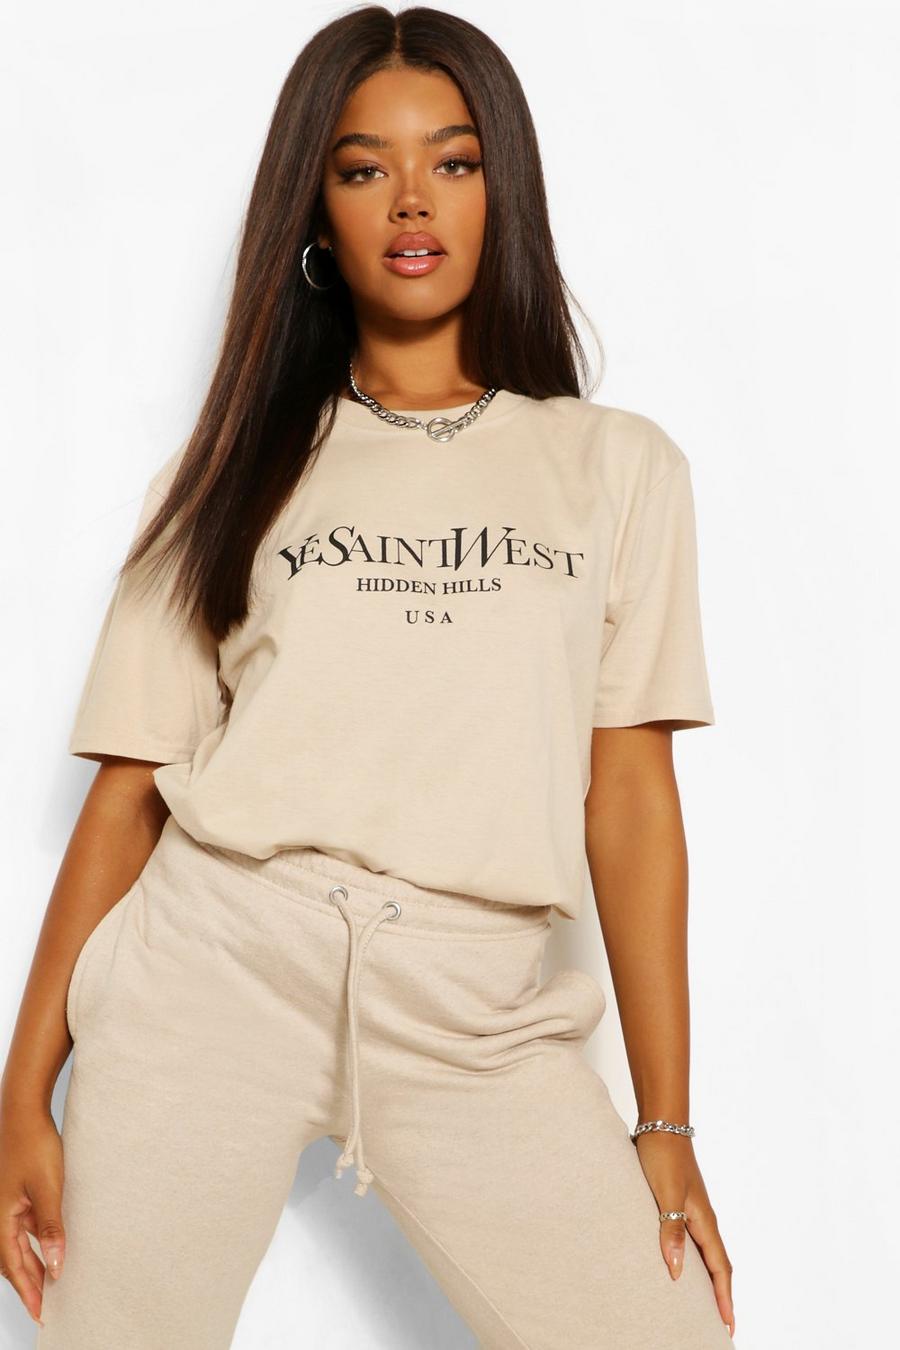 Ladies Short Sleeve Boss Lady T-Shirt Women's Oversized Summer Tee Shirt Top  UK 